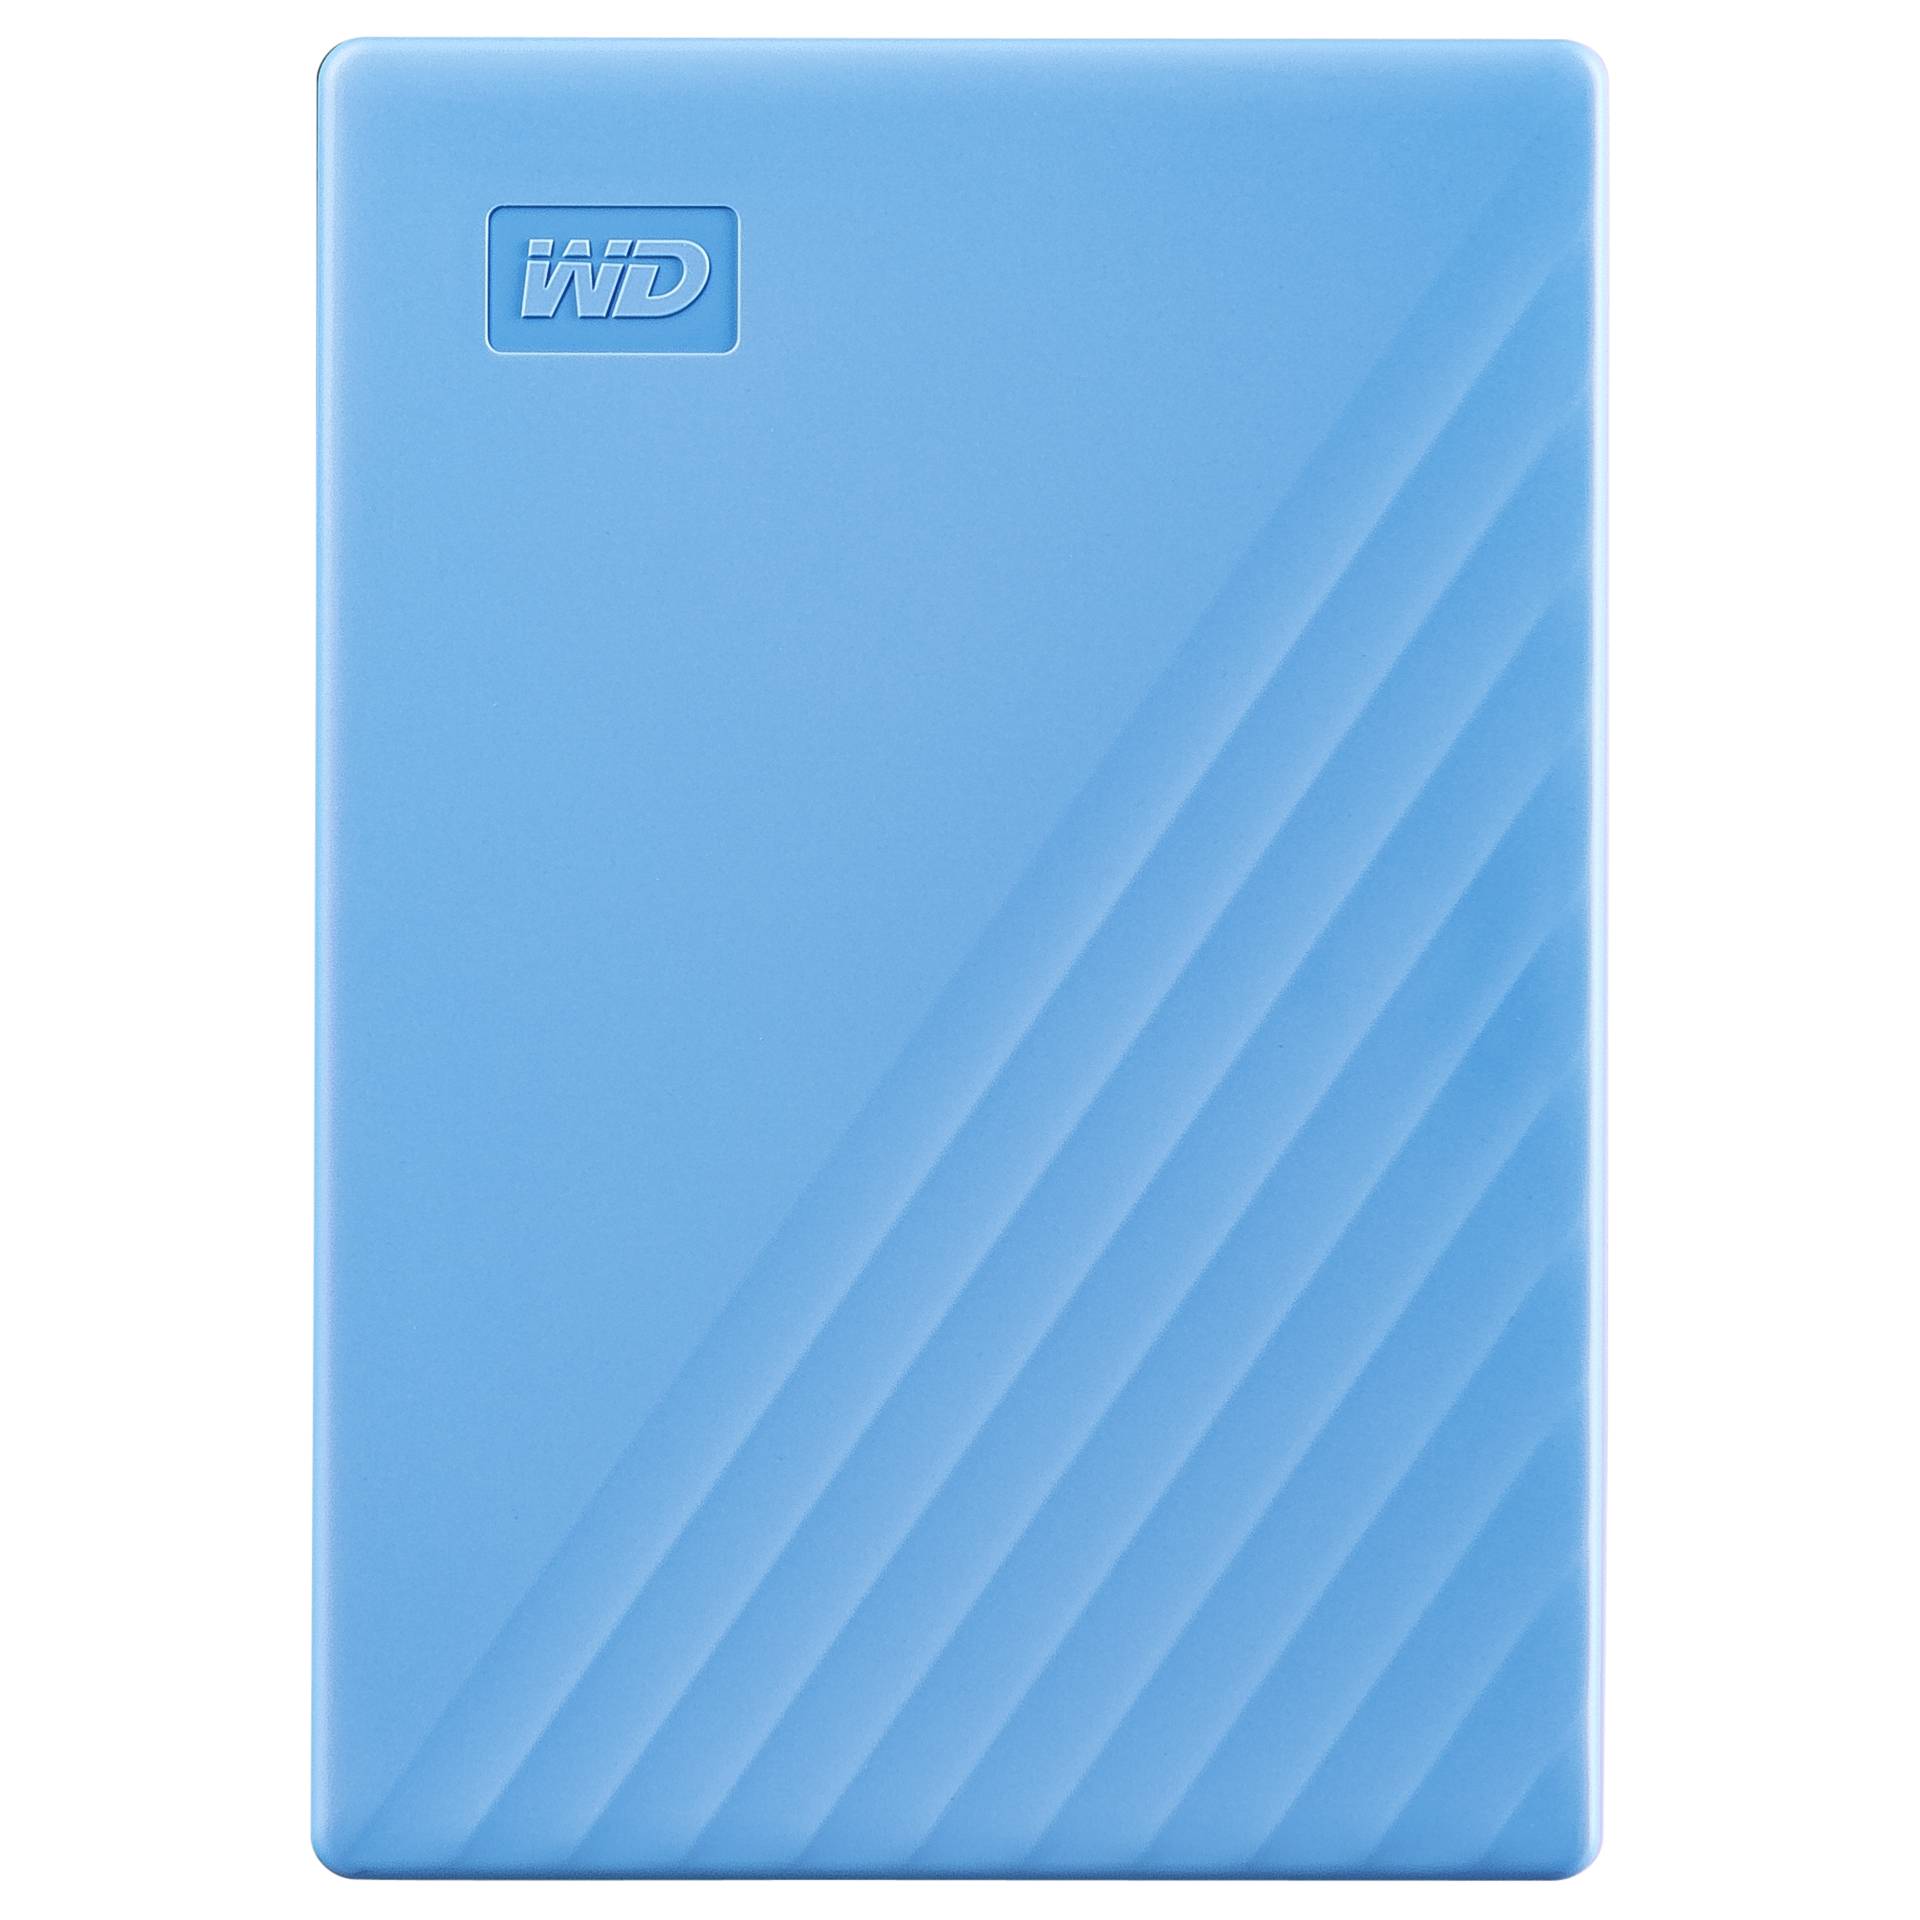 2.0 TB Western Digital WD My Passport Portable Storage 2019 blau, USB 3.0 Micro-B